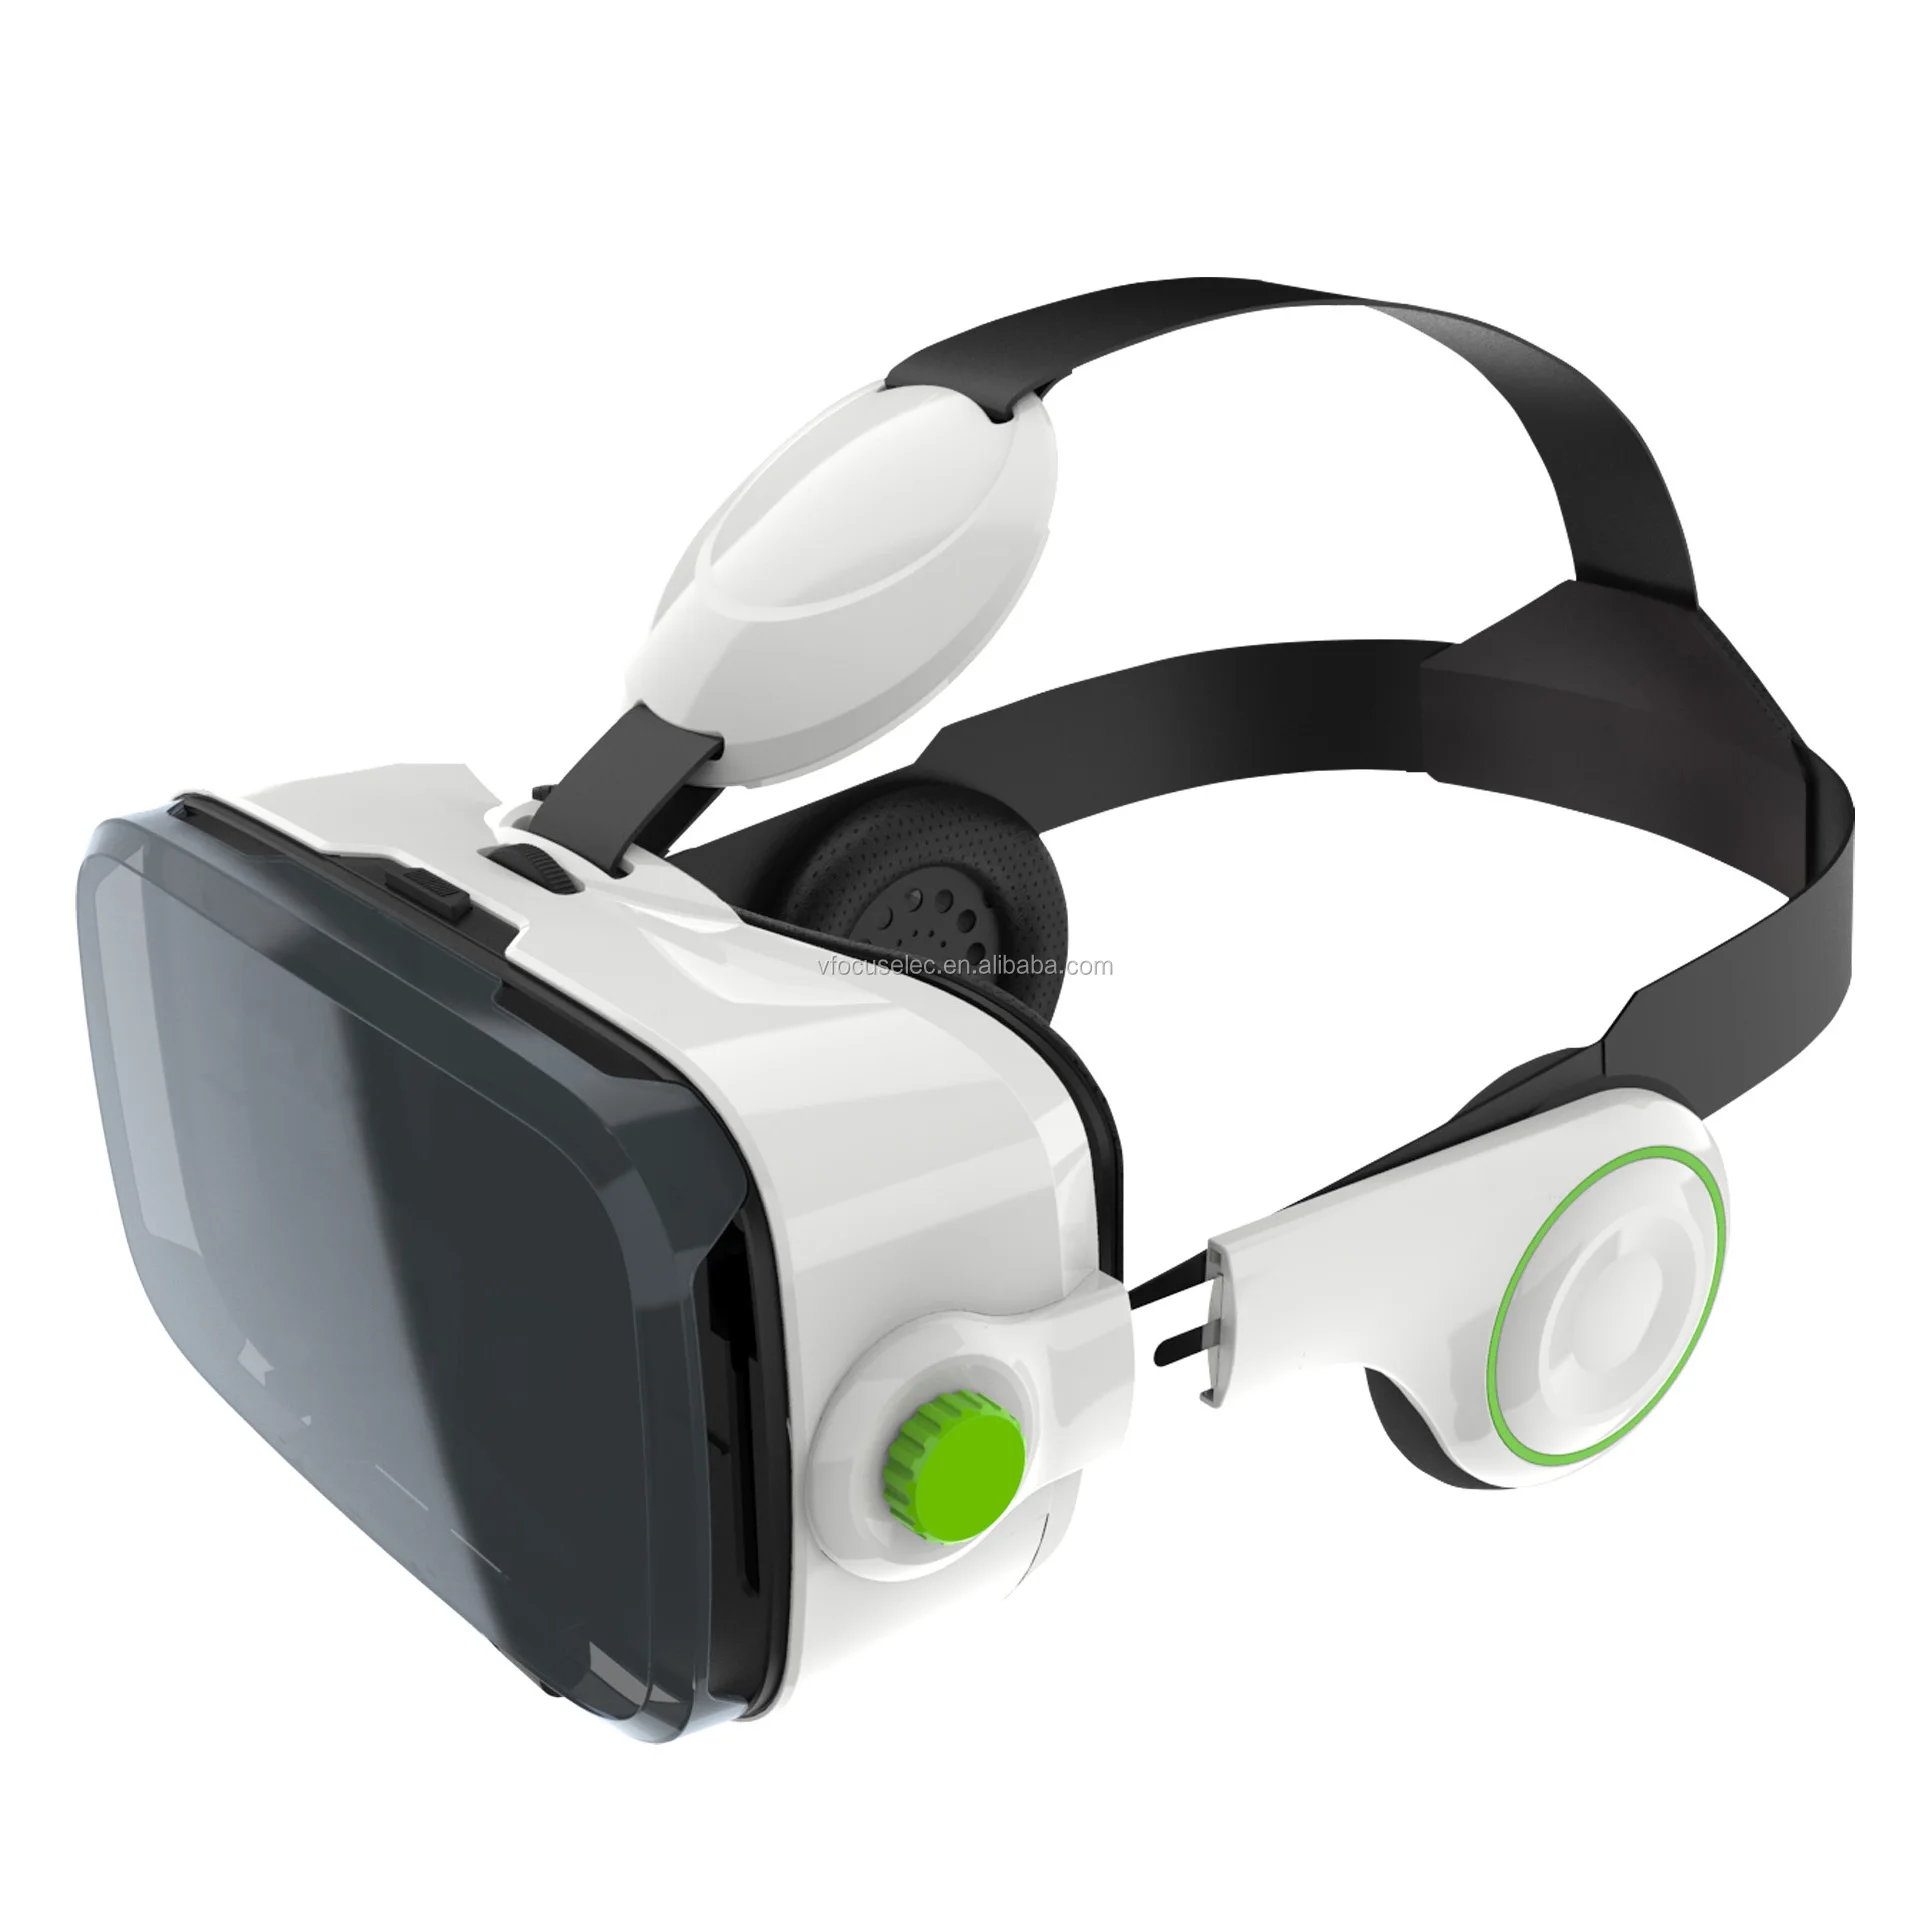 Nemlig Hollow Tick Bobo Vr Z4 3d Glasses Virtual Reality Vr Headset For Mobile Phone - Buy Vr  Headset,3d Vr Glasses,Bobo Vr Z4 Product on Alibaba.com